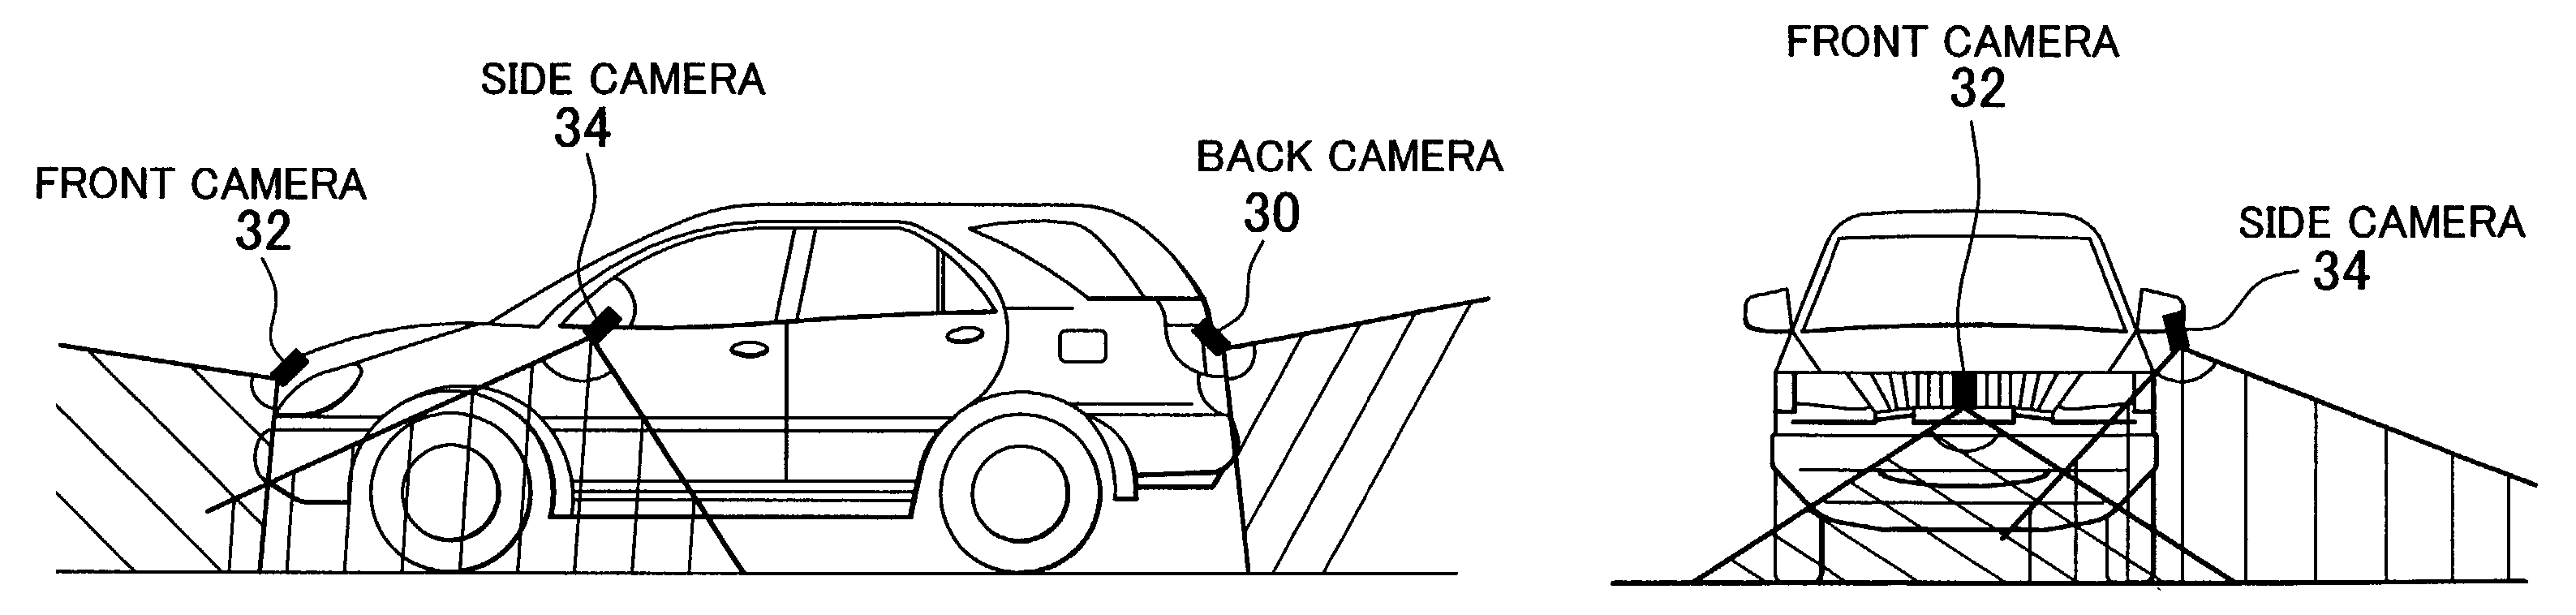 Vehicle periphery monitor